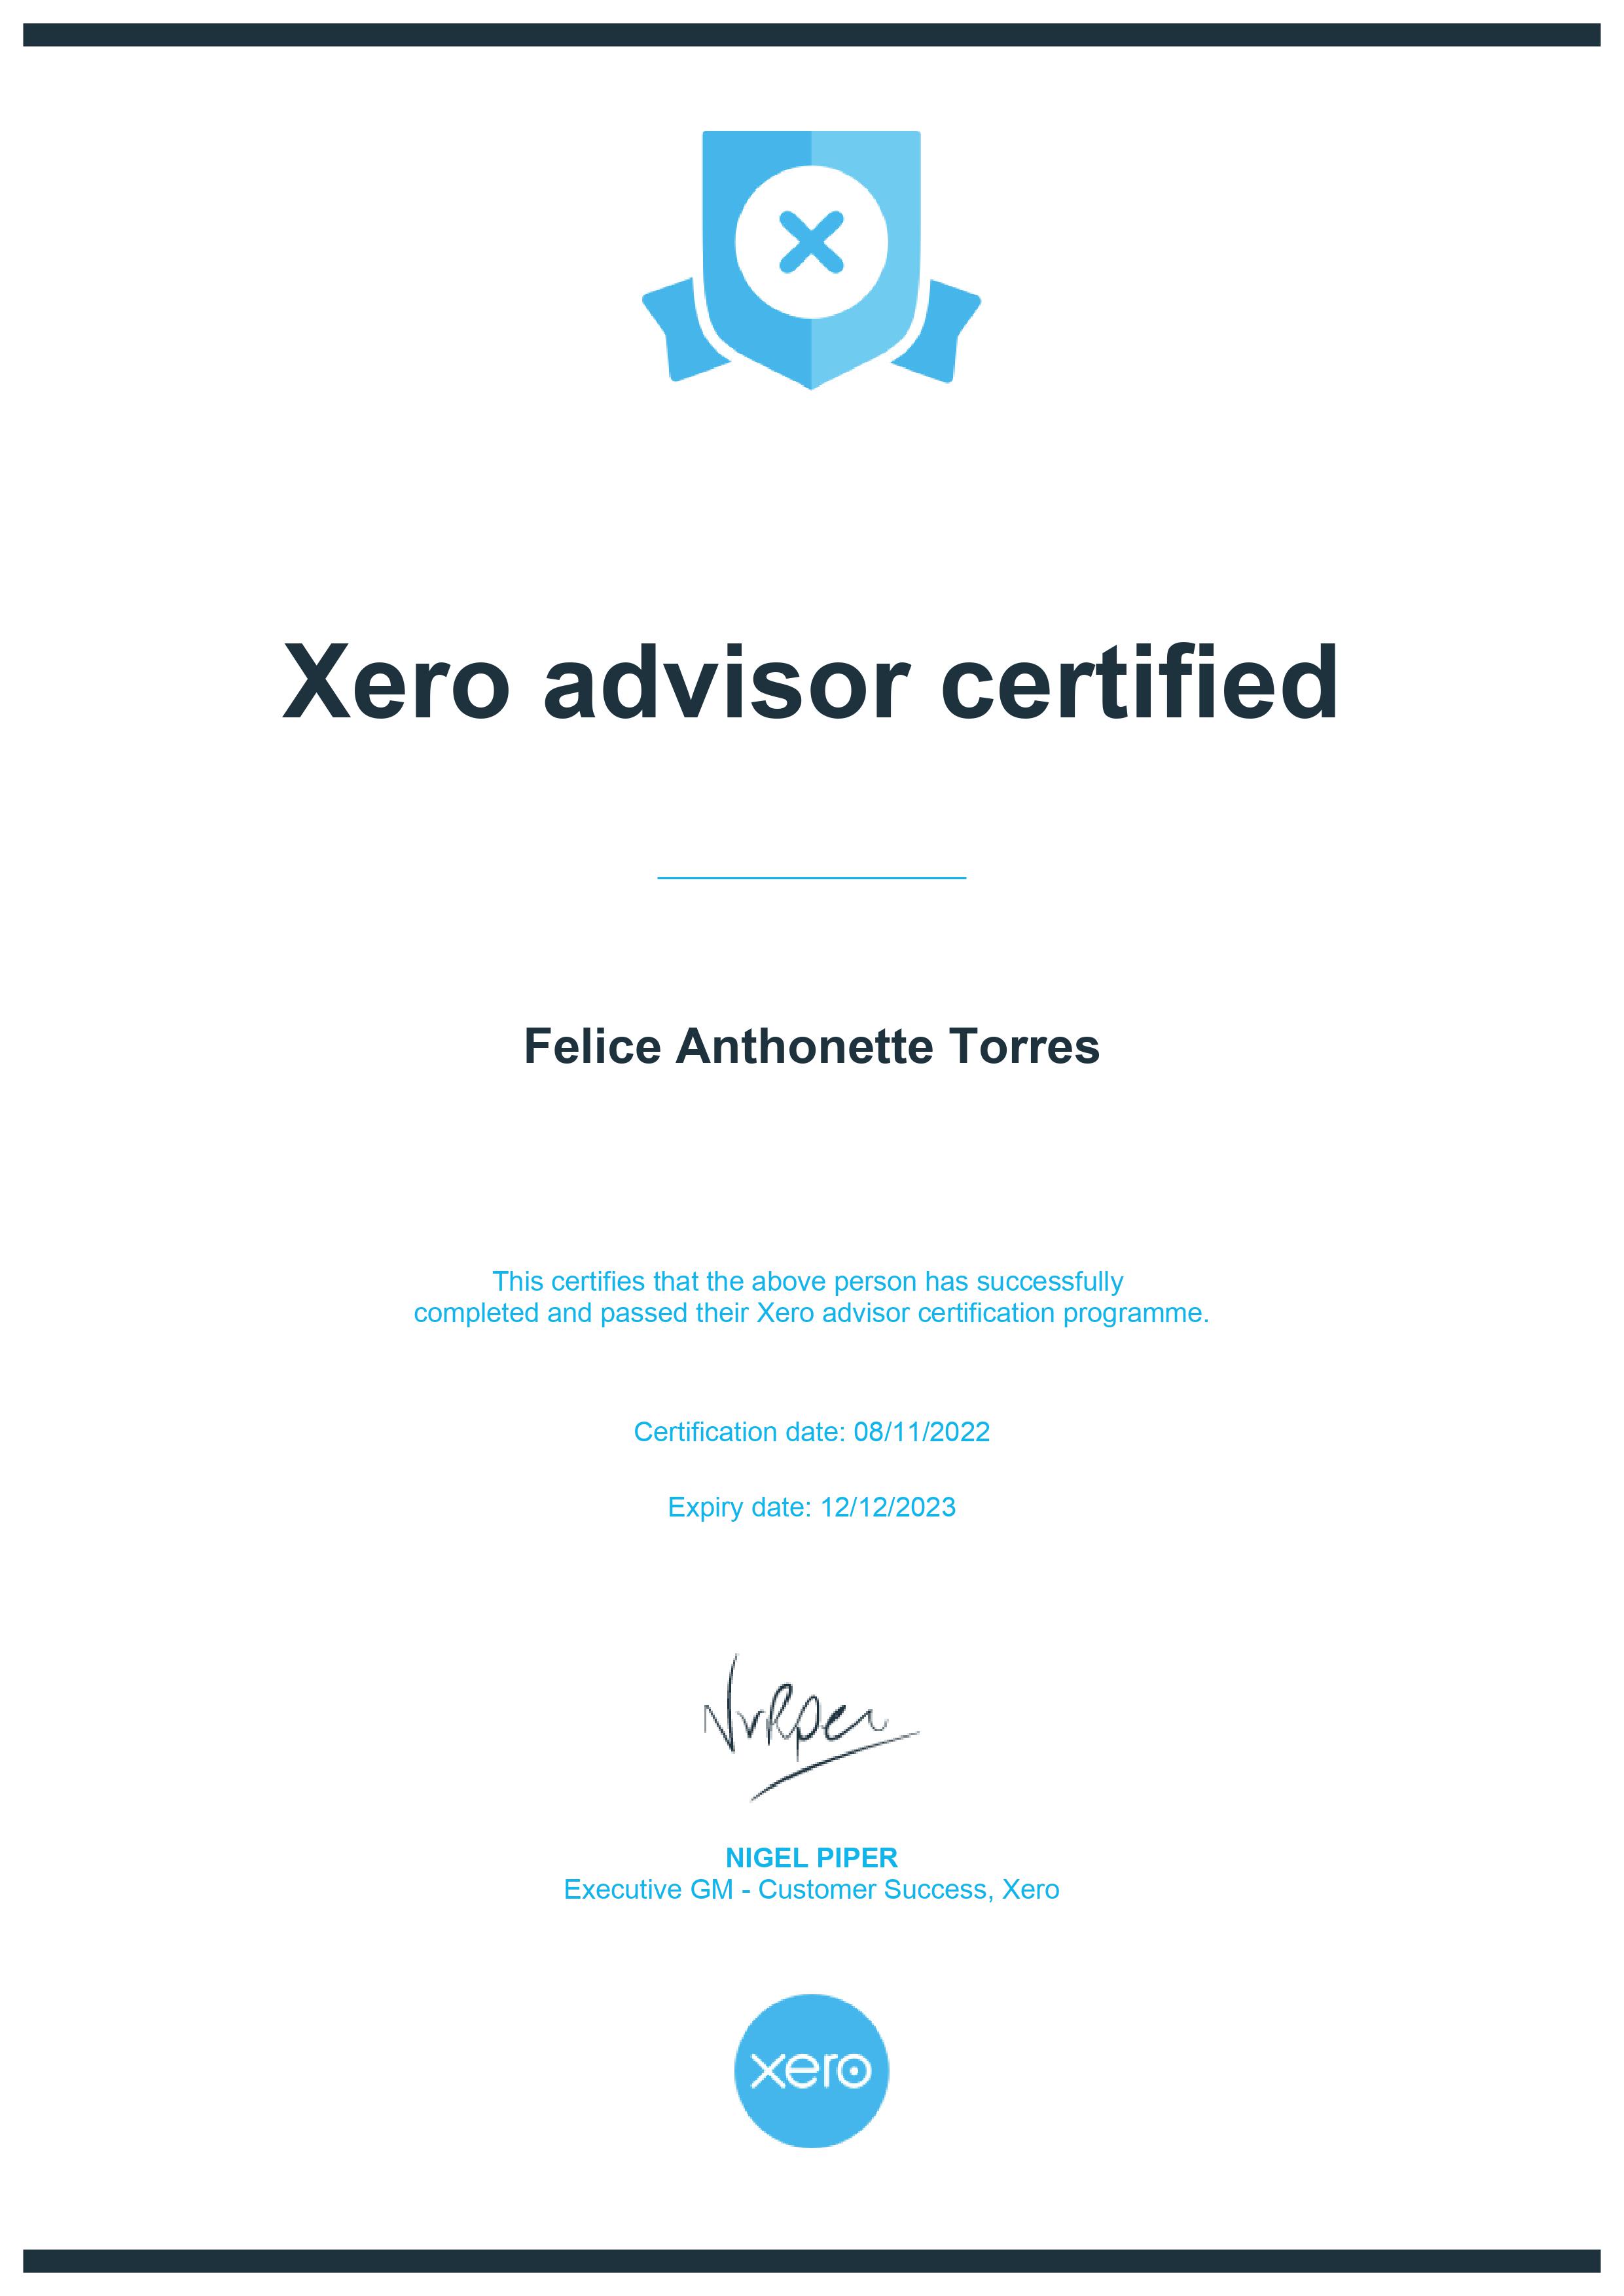 Xero Advisor Certification